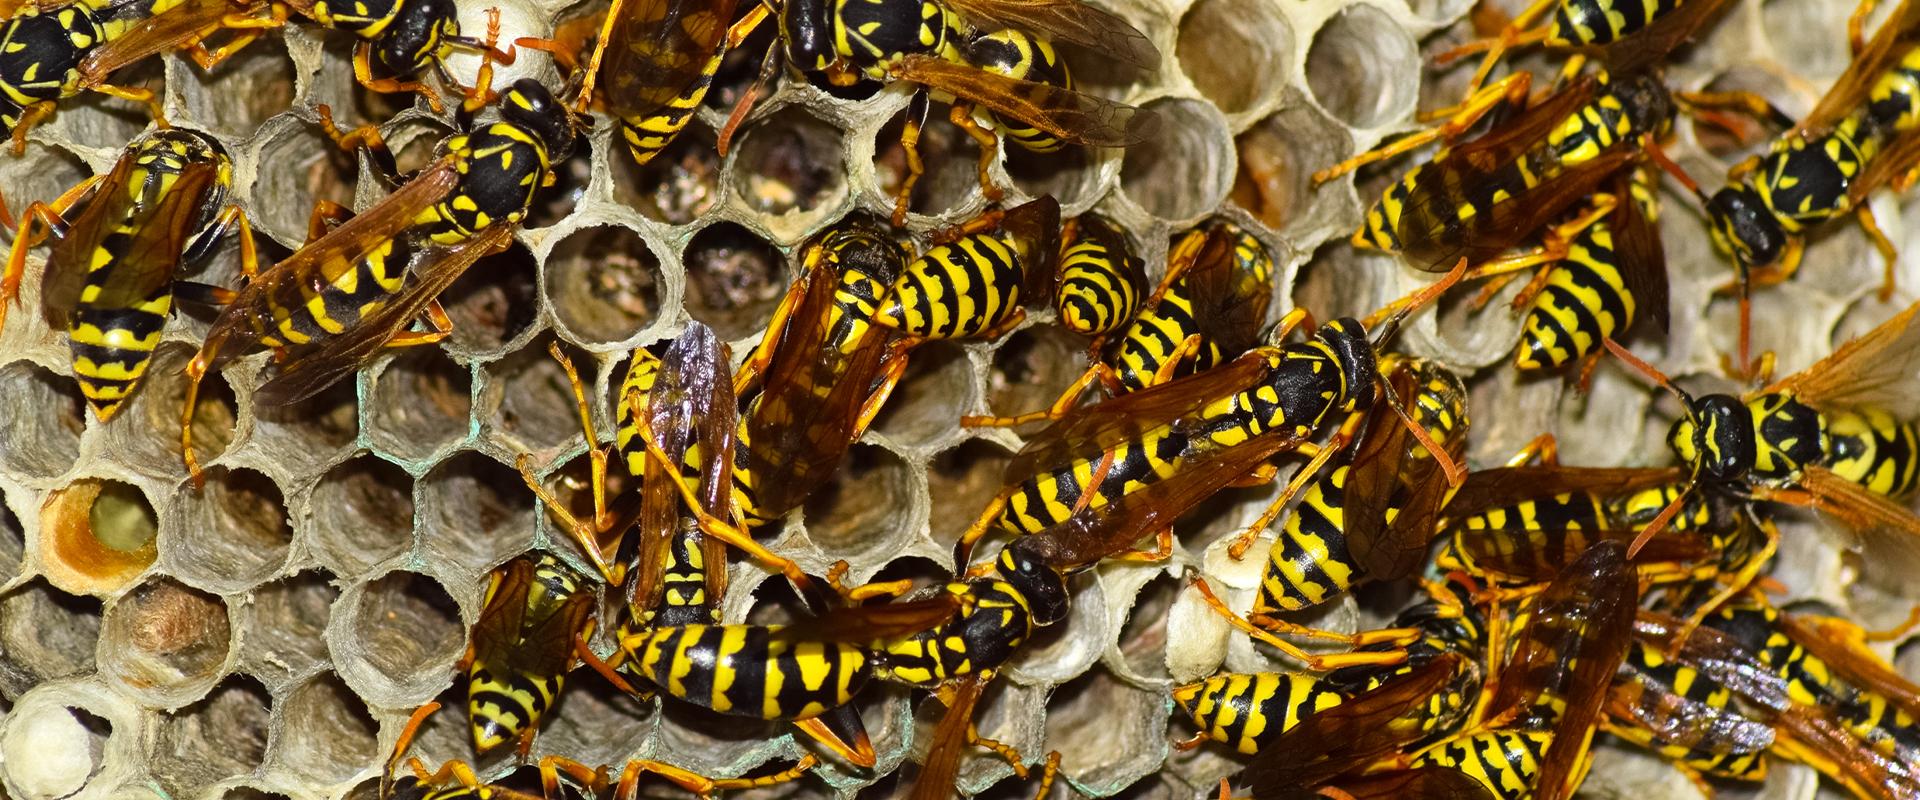 wasps gathered on the nest